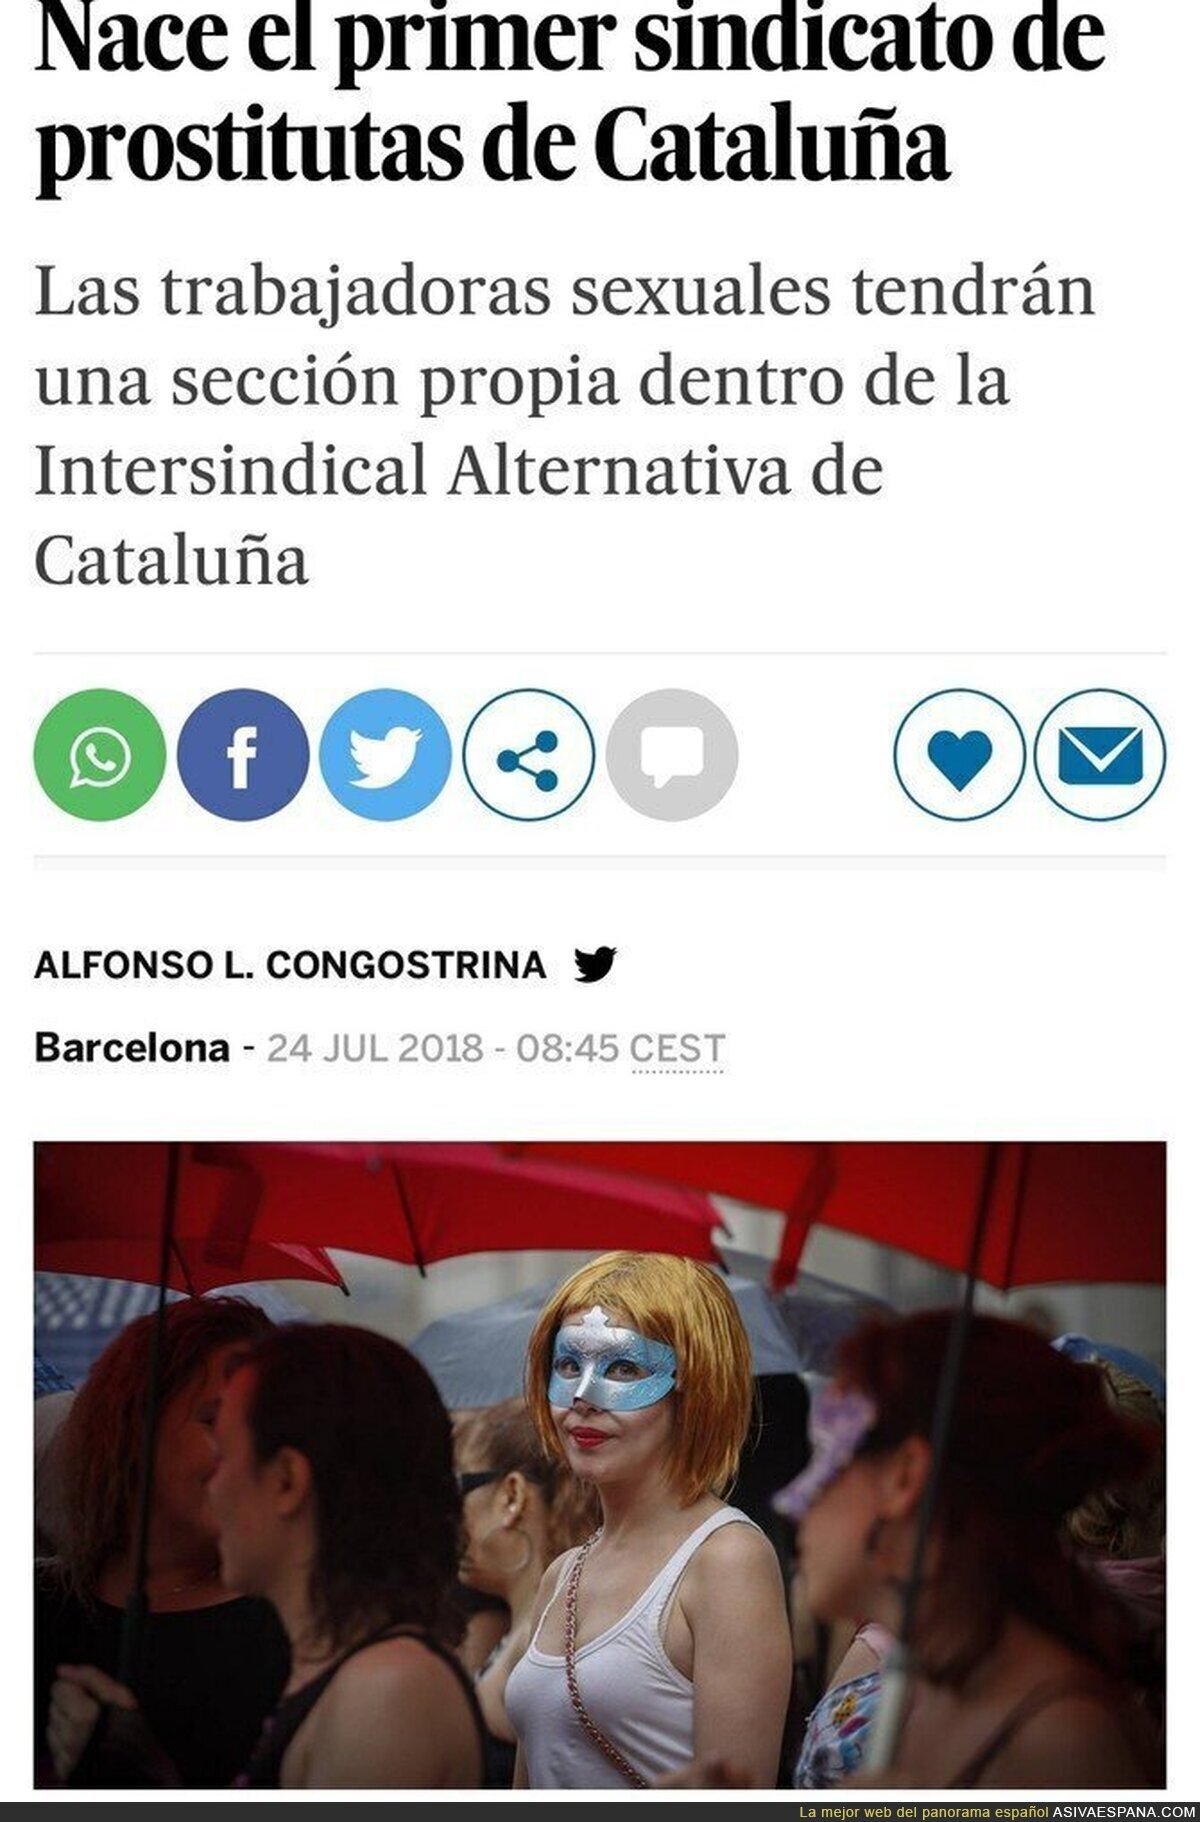 Primer sindicato de prostitutas en Cataluña.